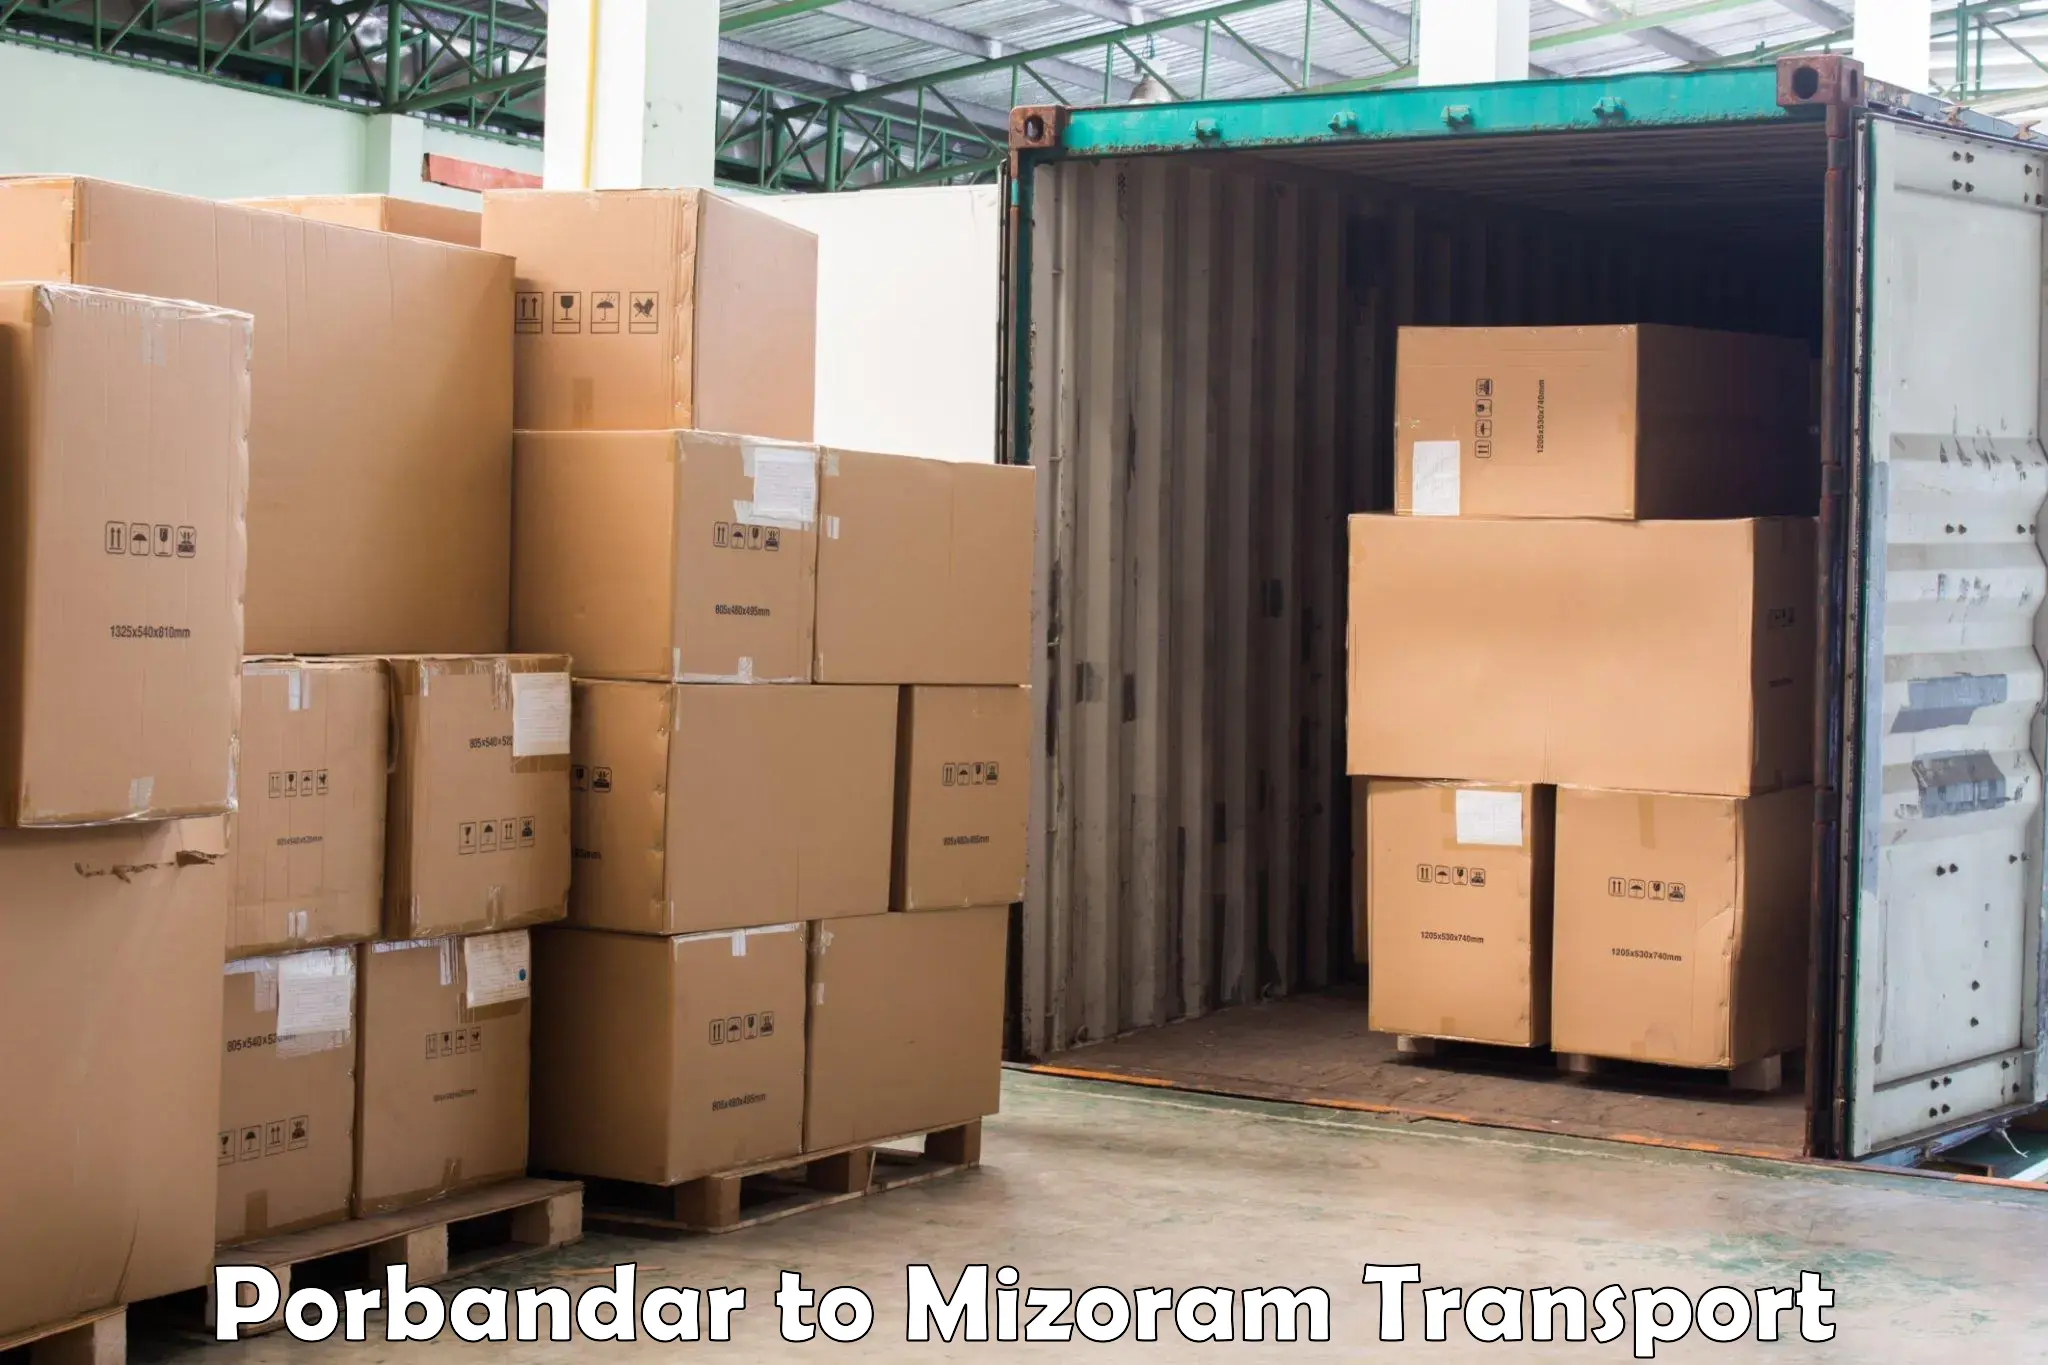 Transport bike from one state to another Porbandar to Mizoram